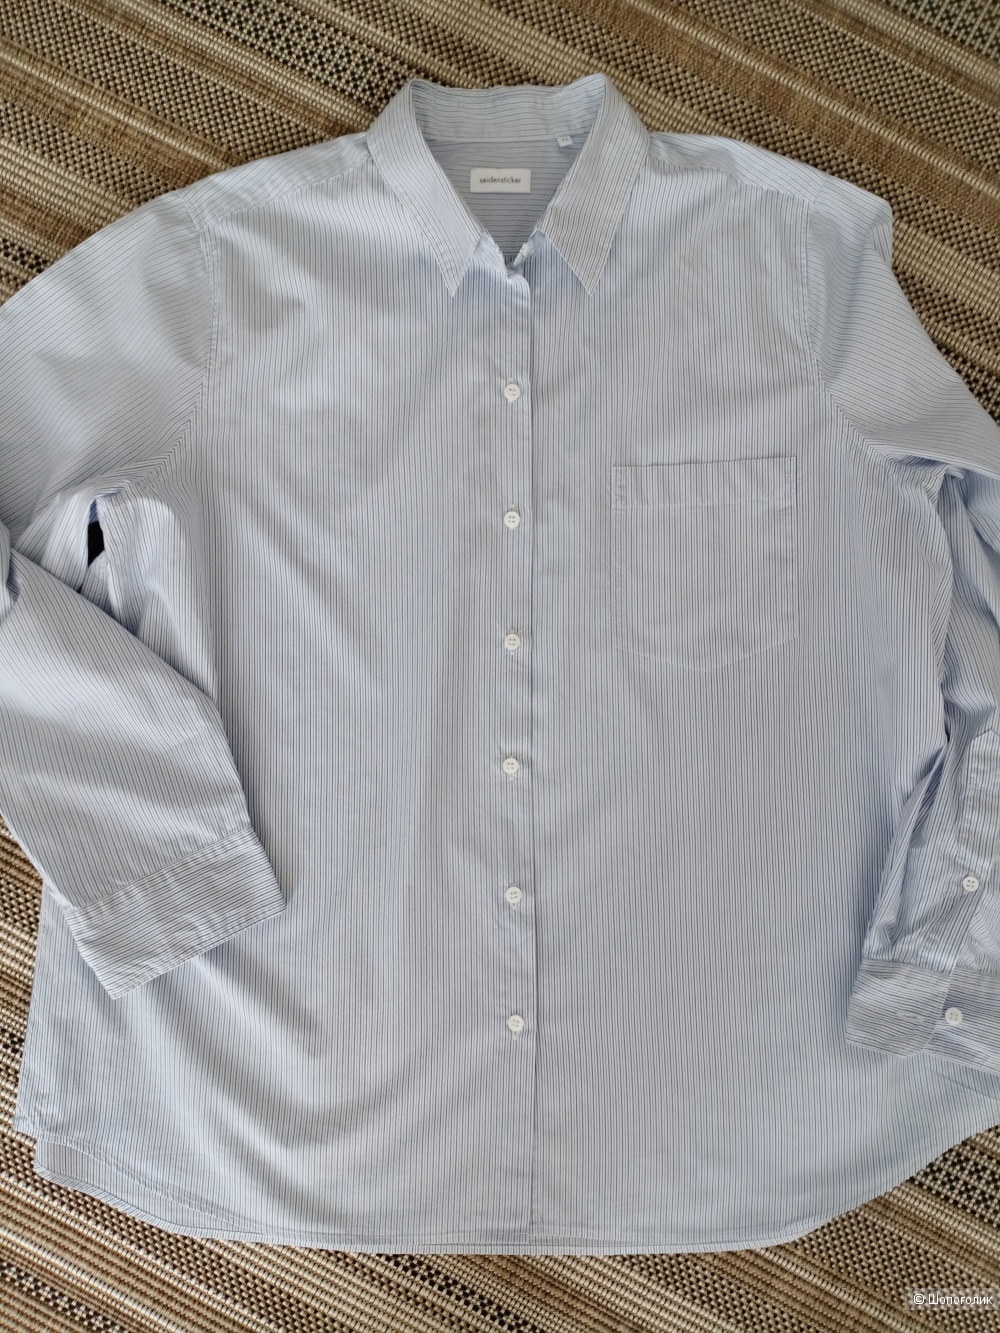 Рубашка, блуза Seidensticker, 48-50